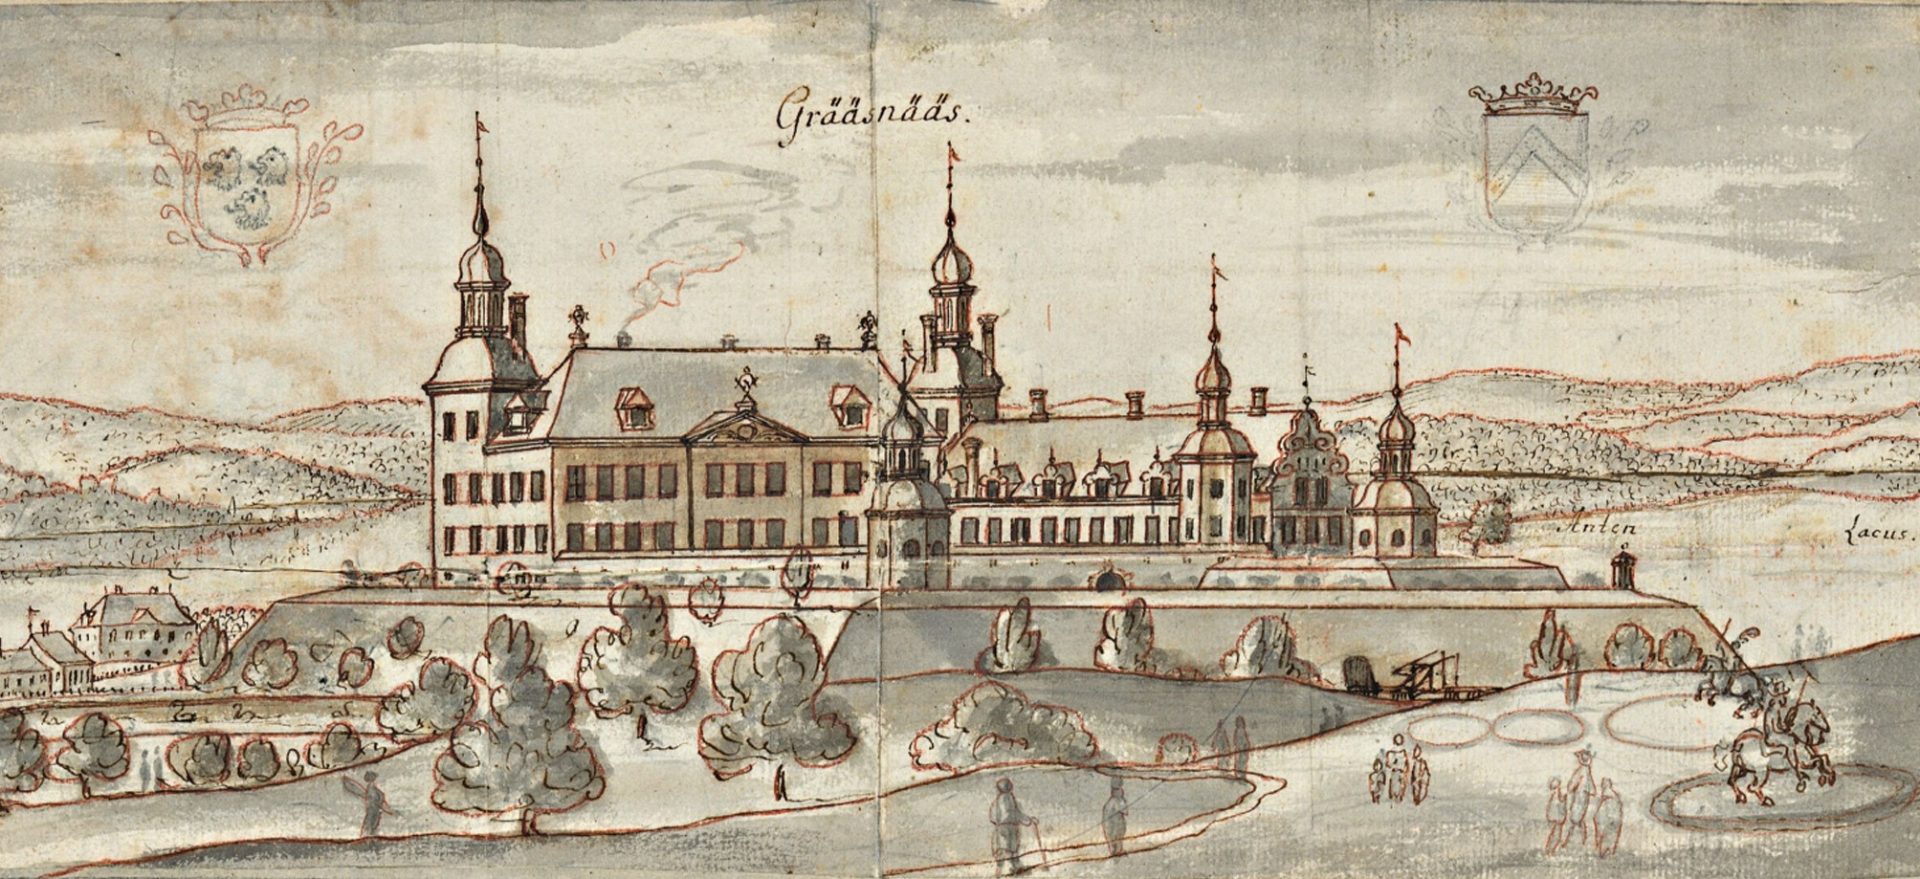 Drawing of Gräfsnäs castle.